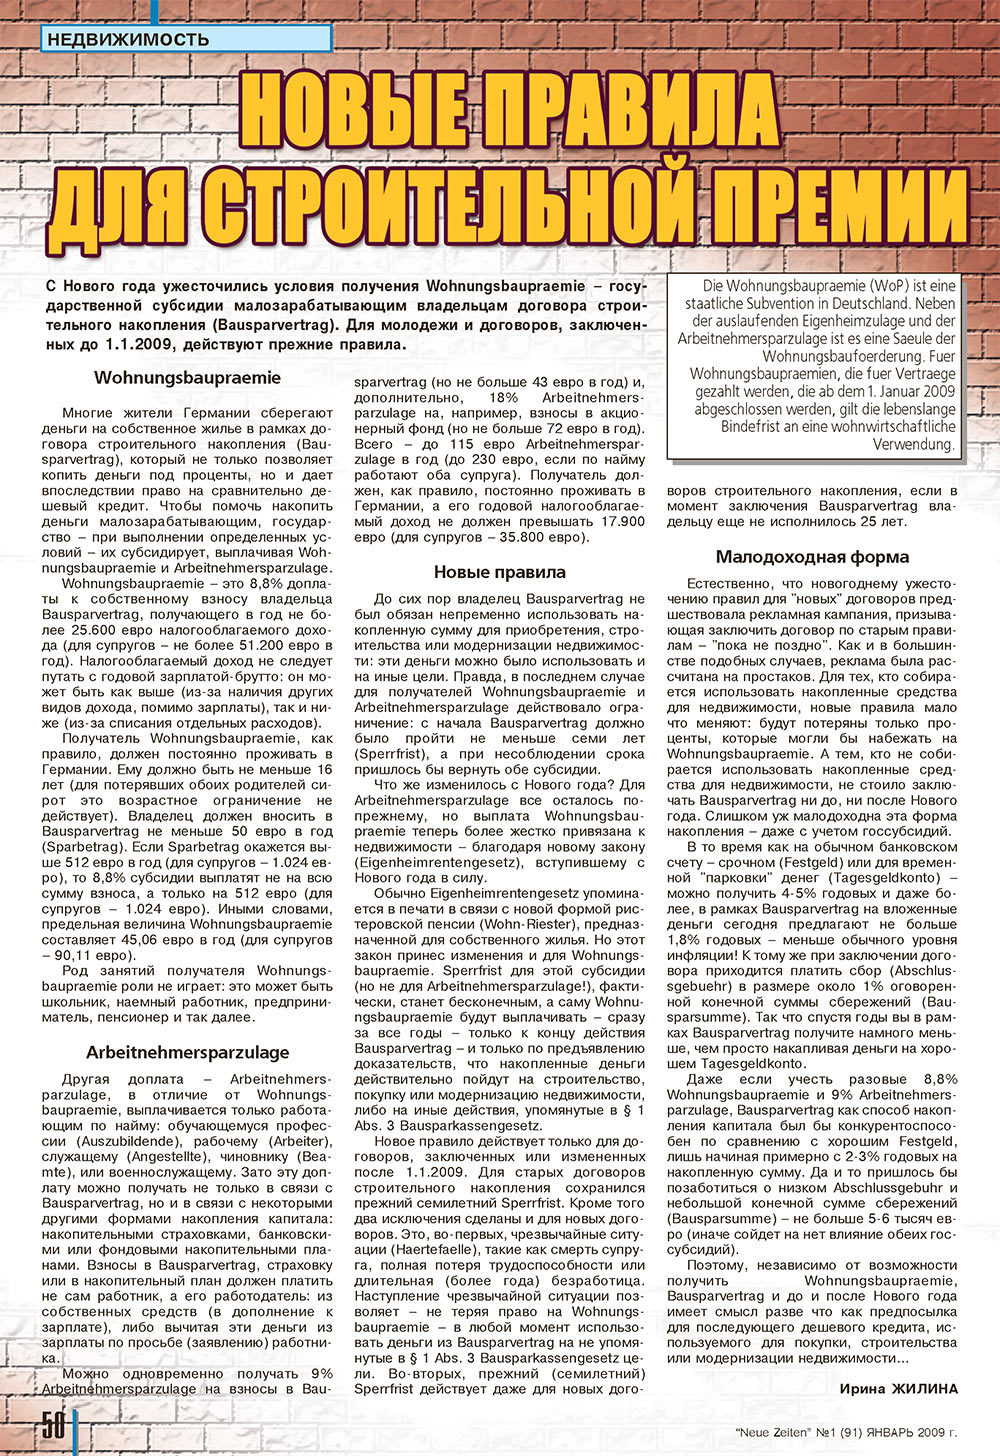 Neue Zeiten (журнал). 2009 год, номер 1, стр. 50